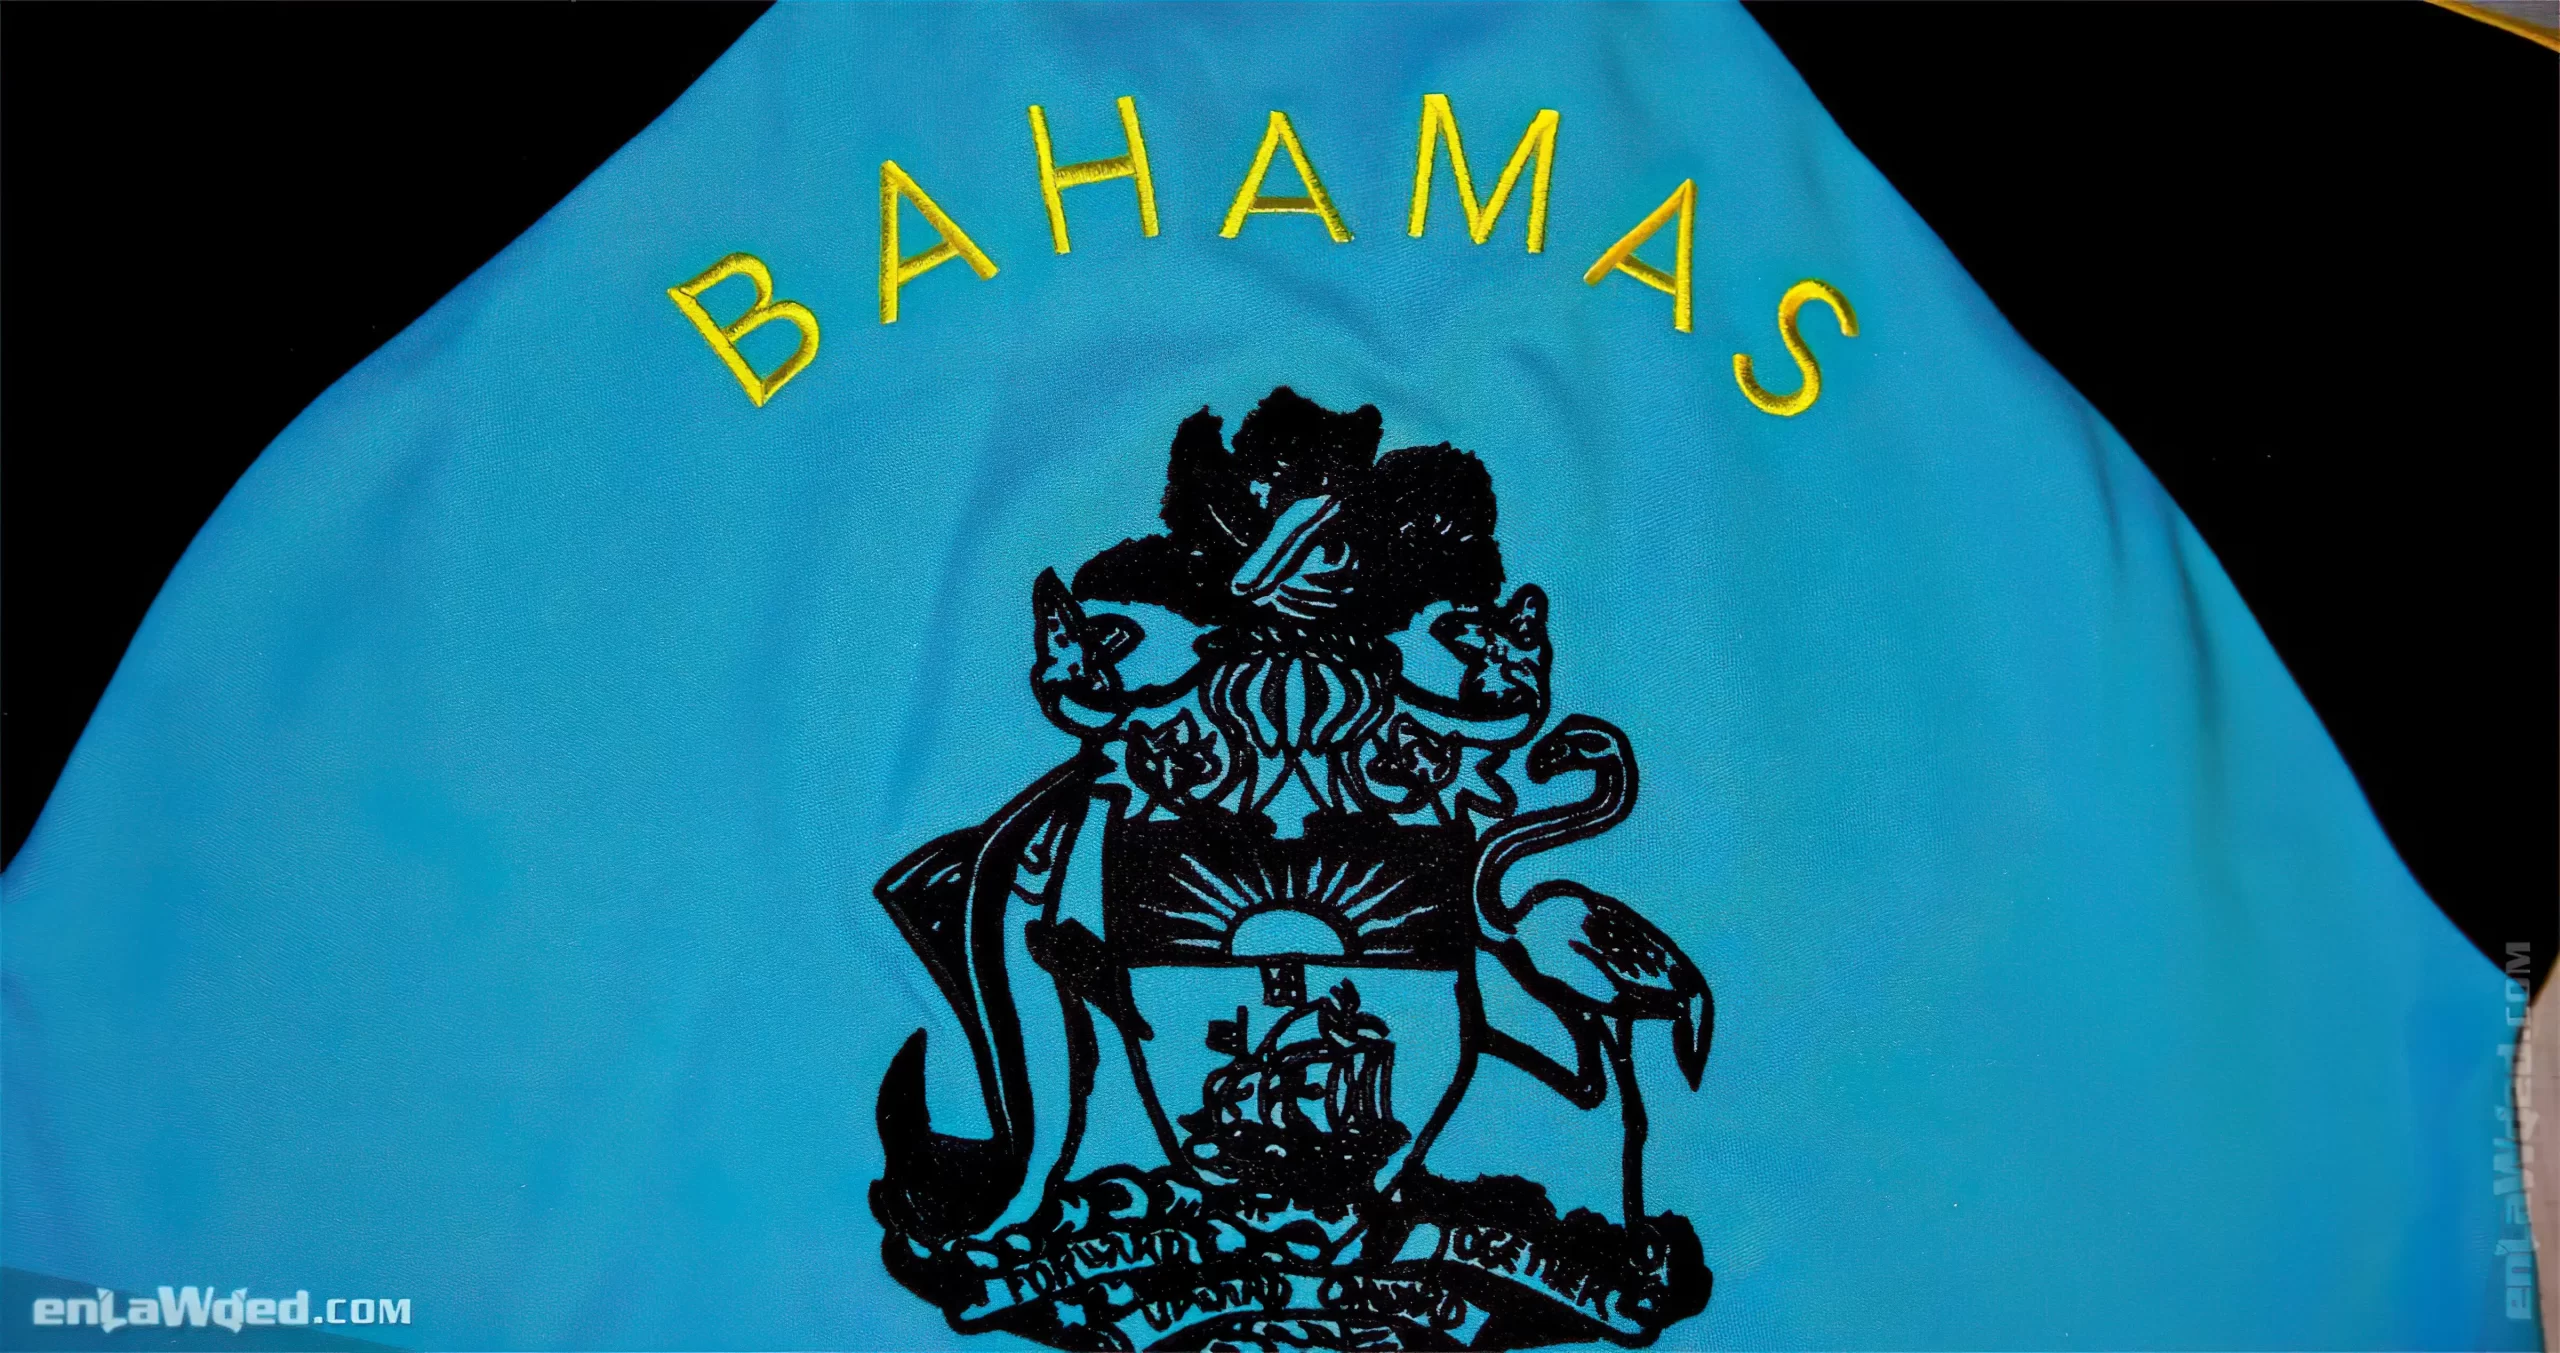 Men’s 2007 Bahamas Track Top by Adidas Originals: Charming (EnLawded.com file #lmchk90198ip2y121949kg9st)